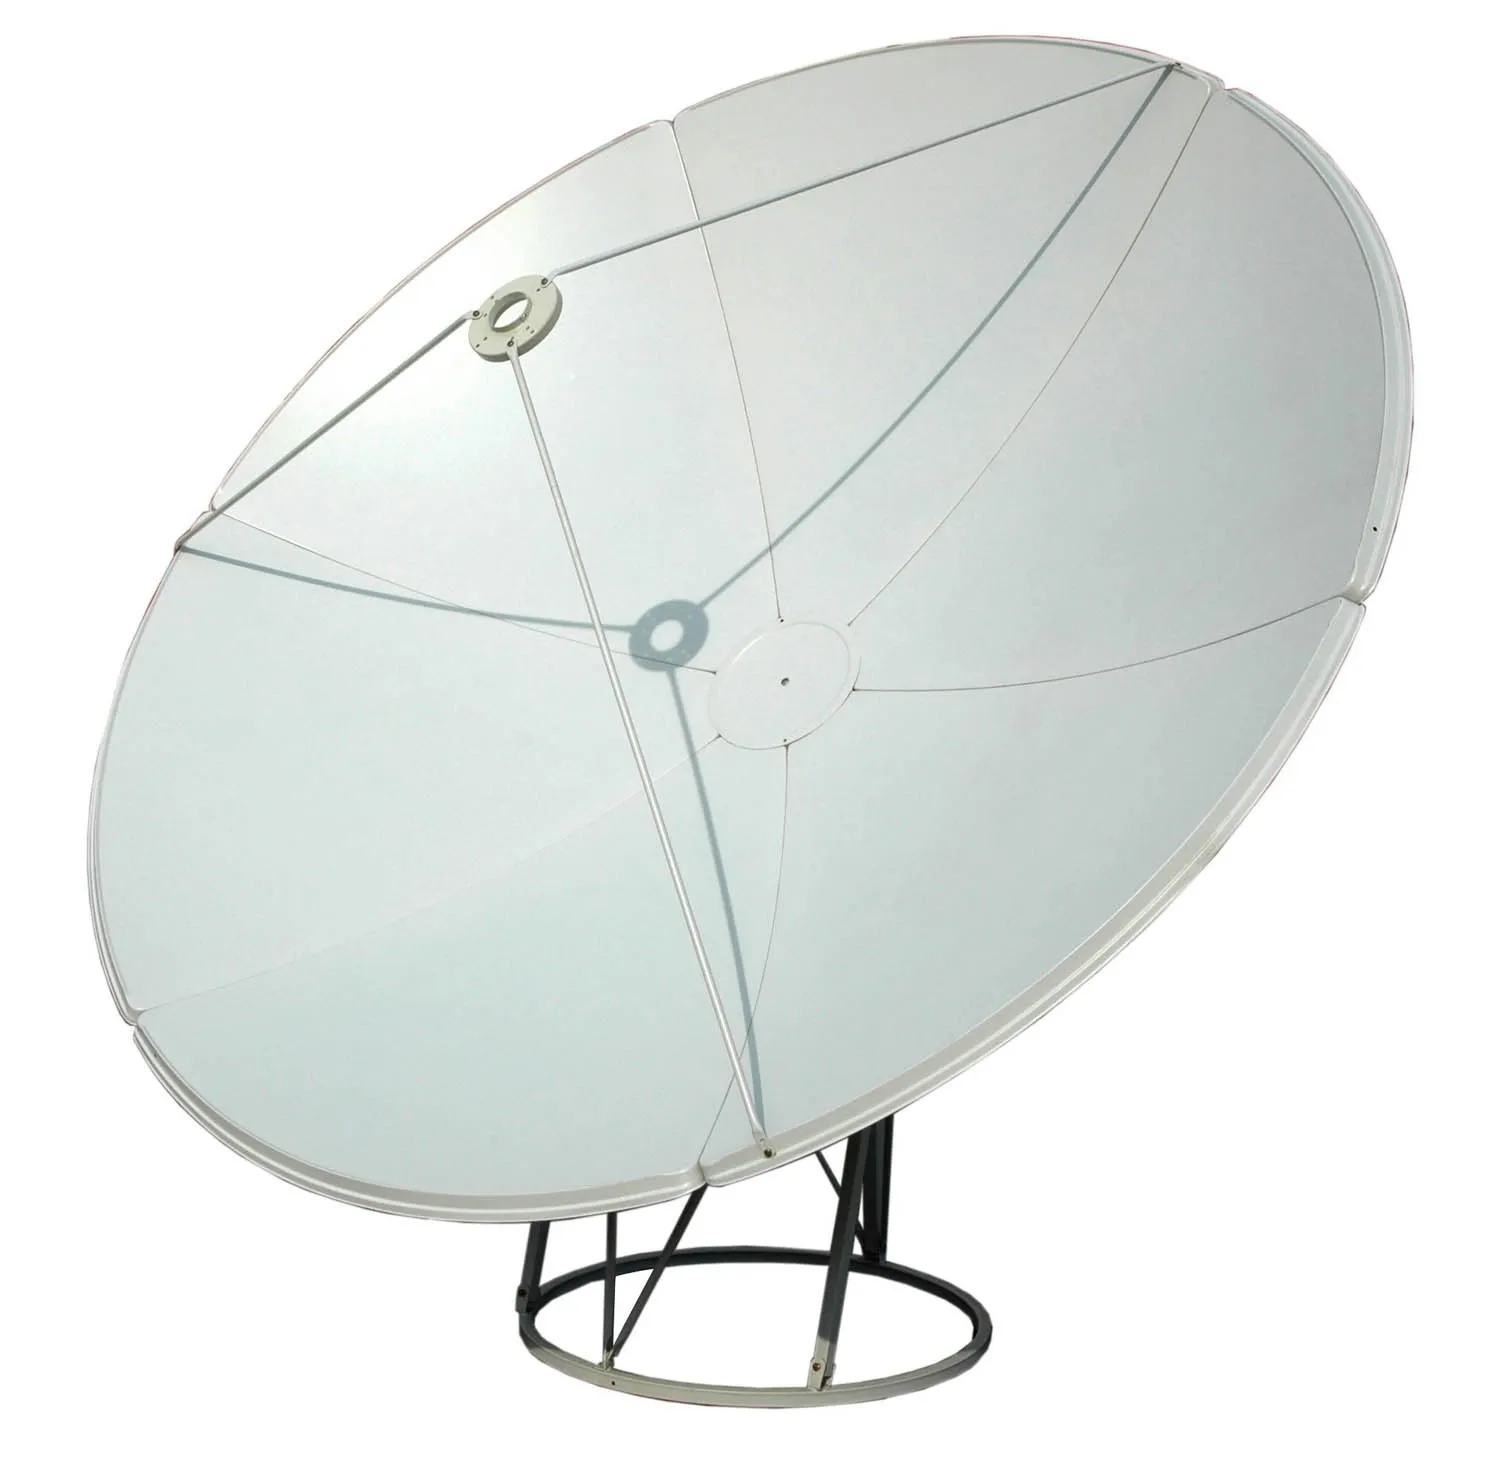 c 1.2m satellite dish antenna,ground mount